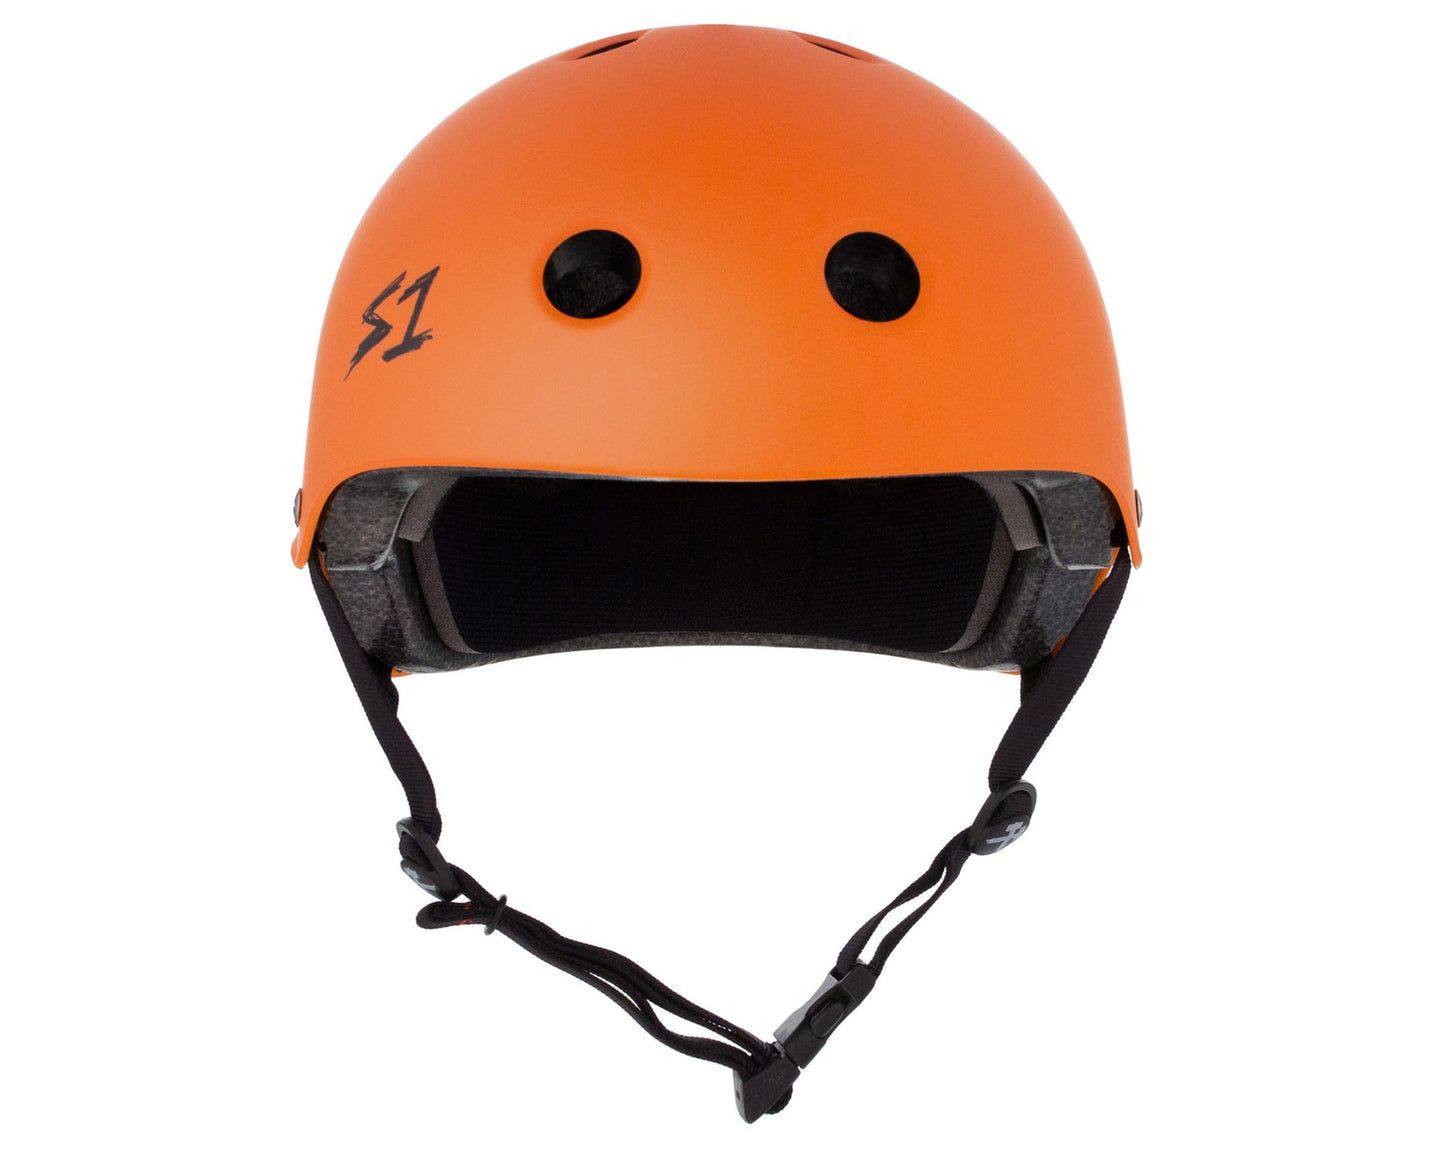 S1 Lifer Helmet - Orange Matte